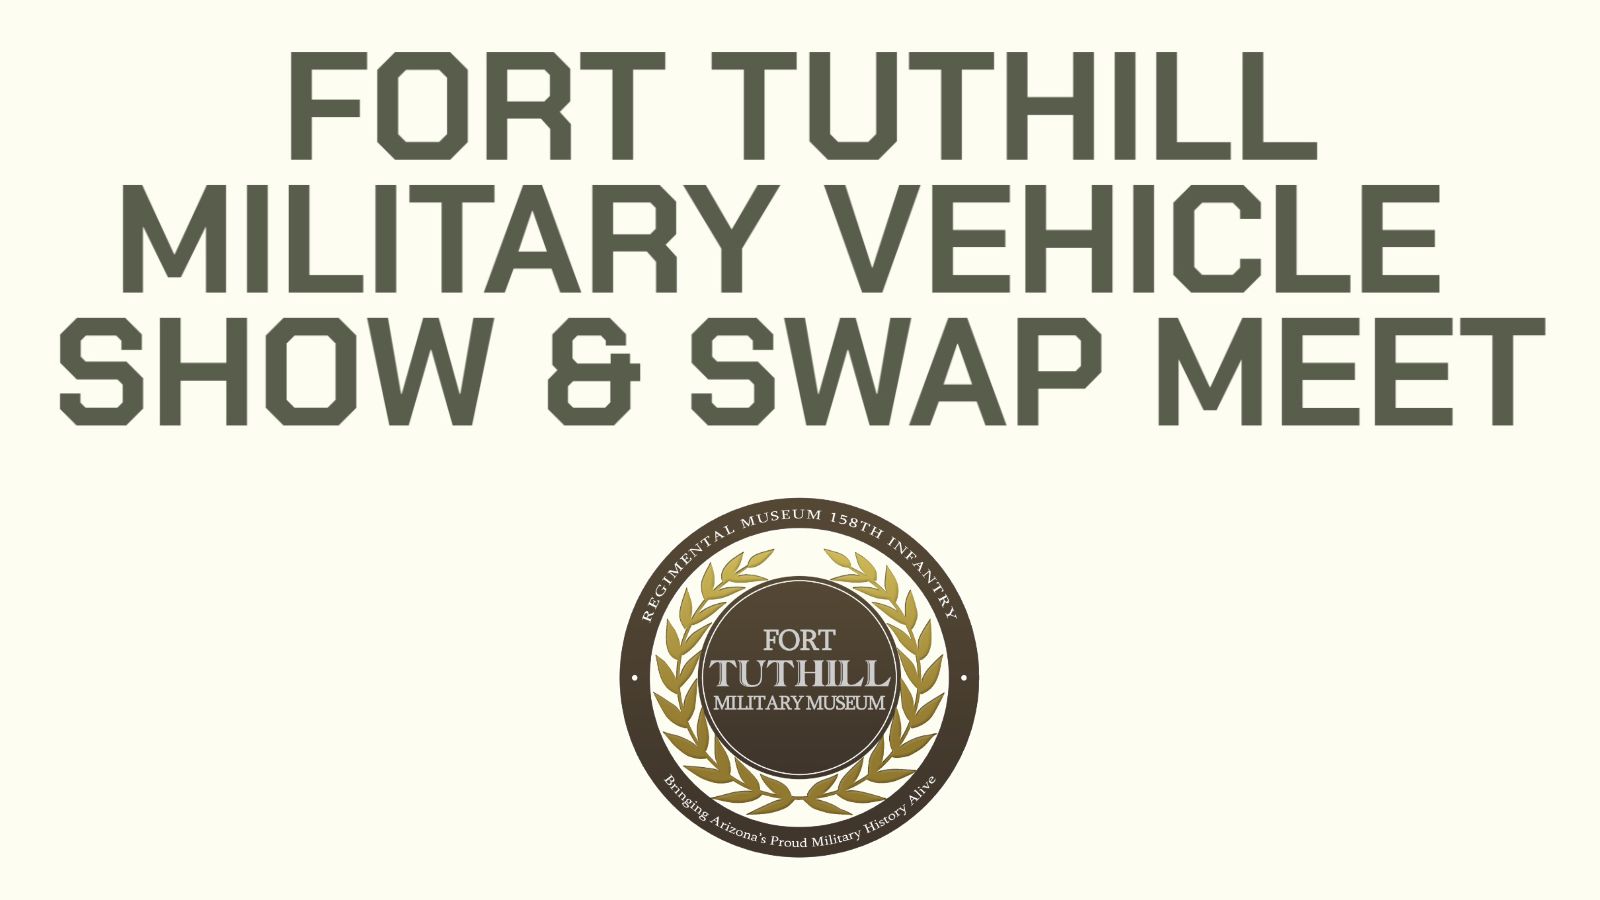 Fort Tuthill Flyer